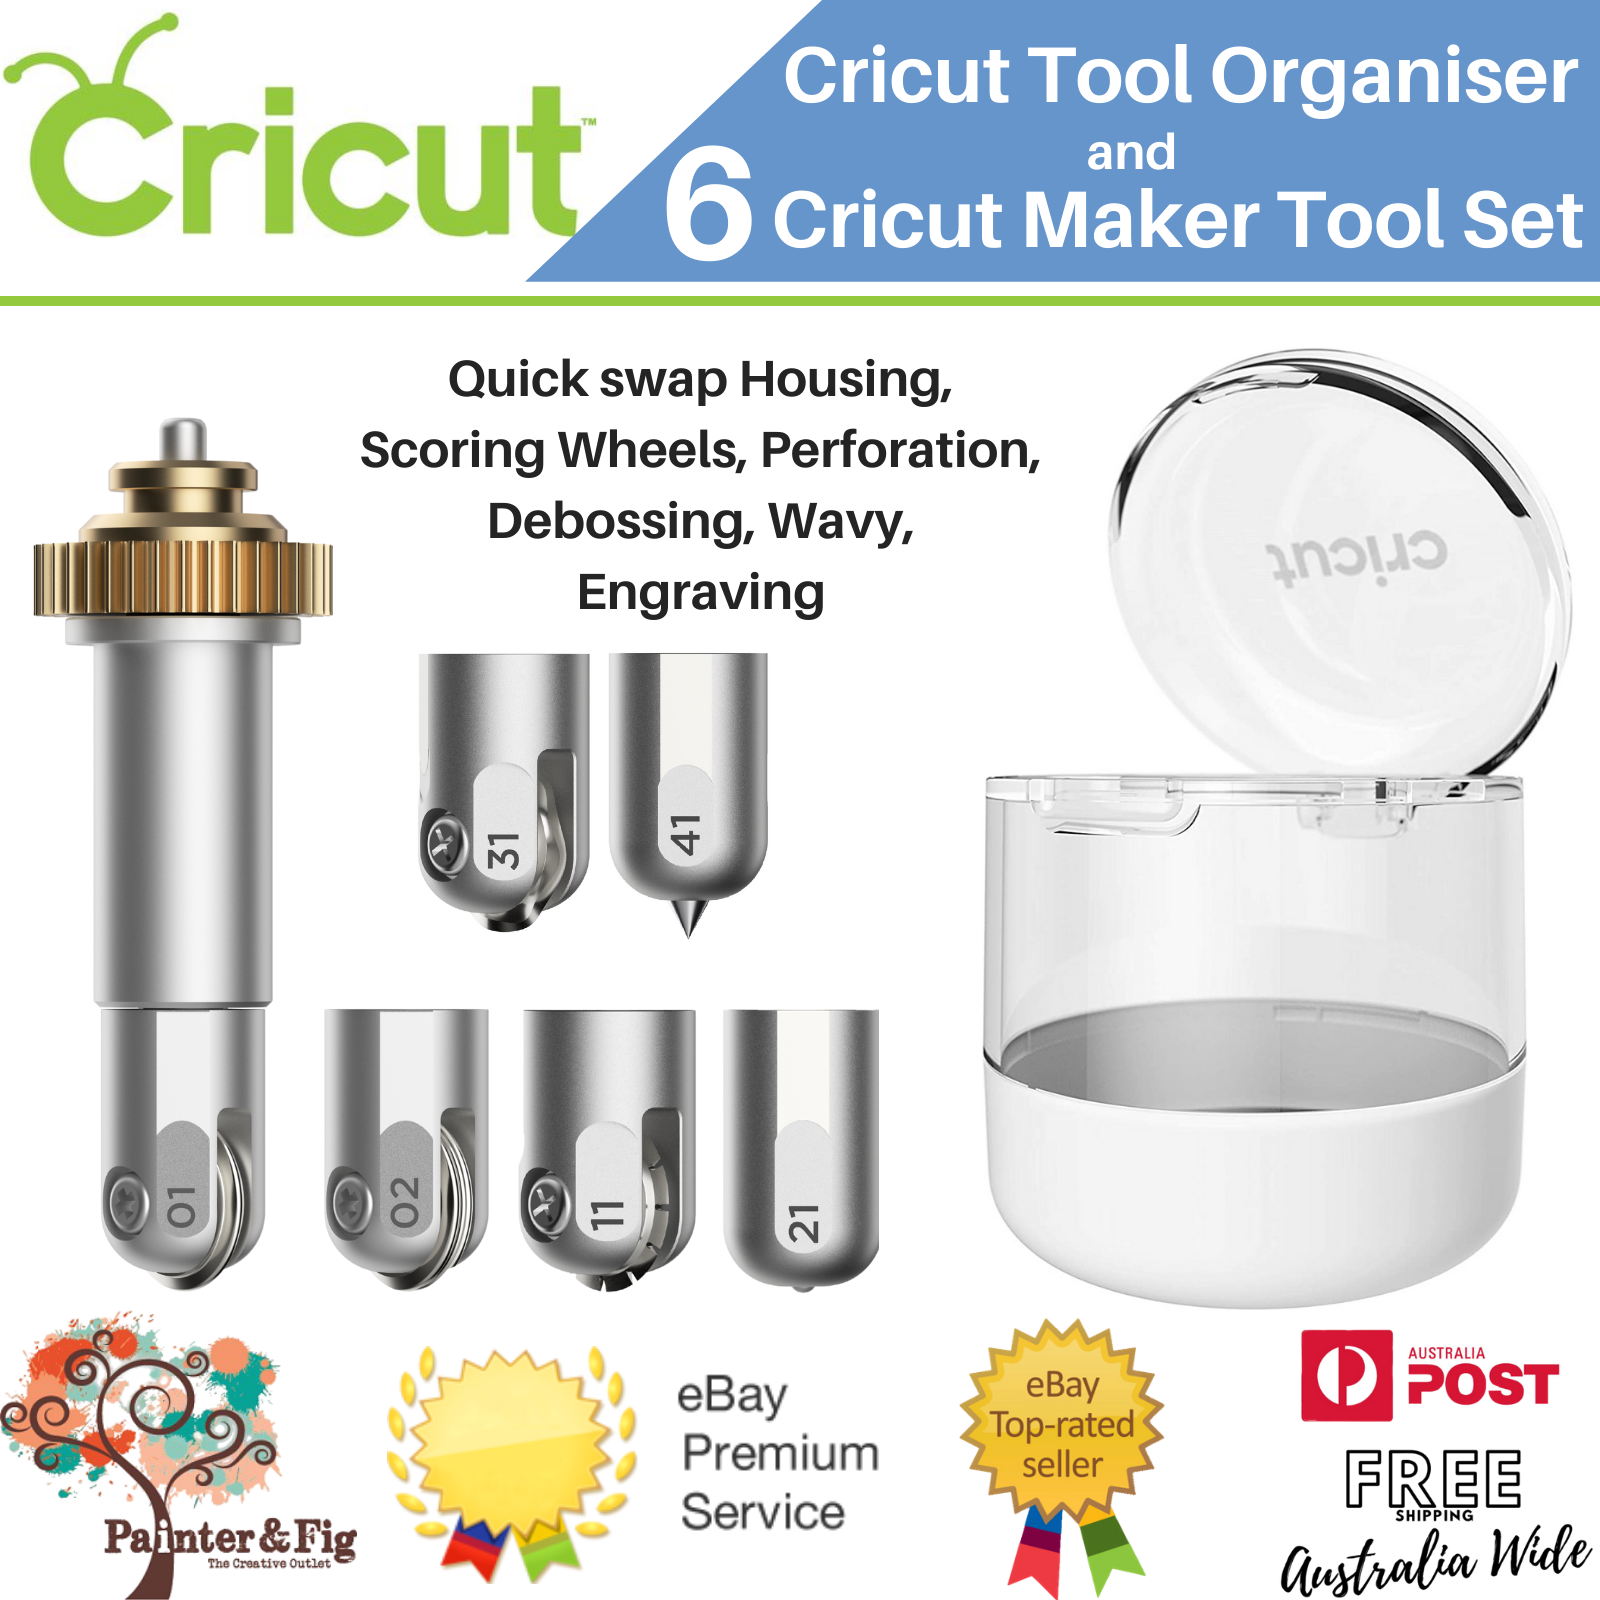 Cricut Maker tools: deboss, engrave, score, wavy cut, perforate